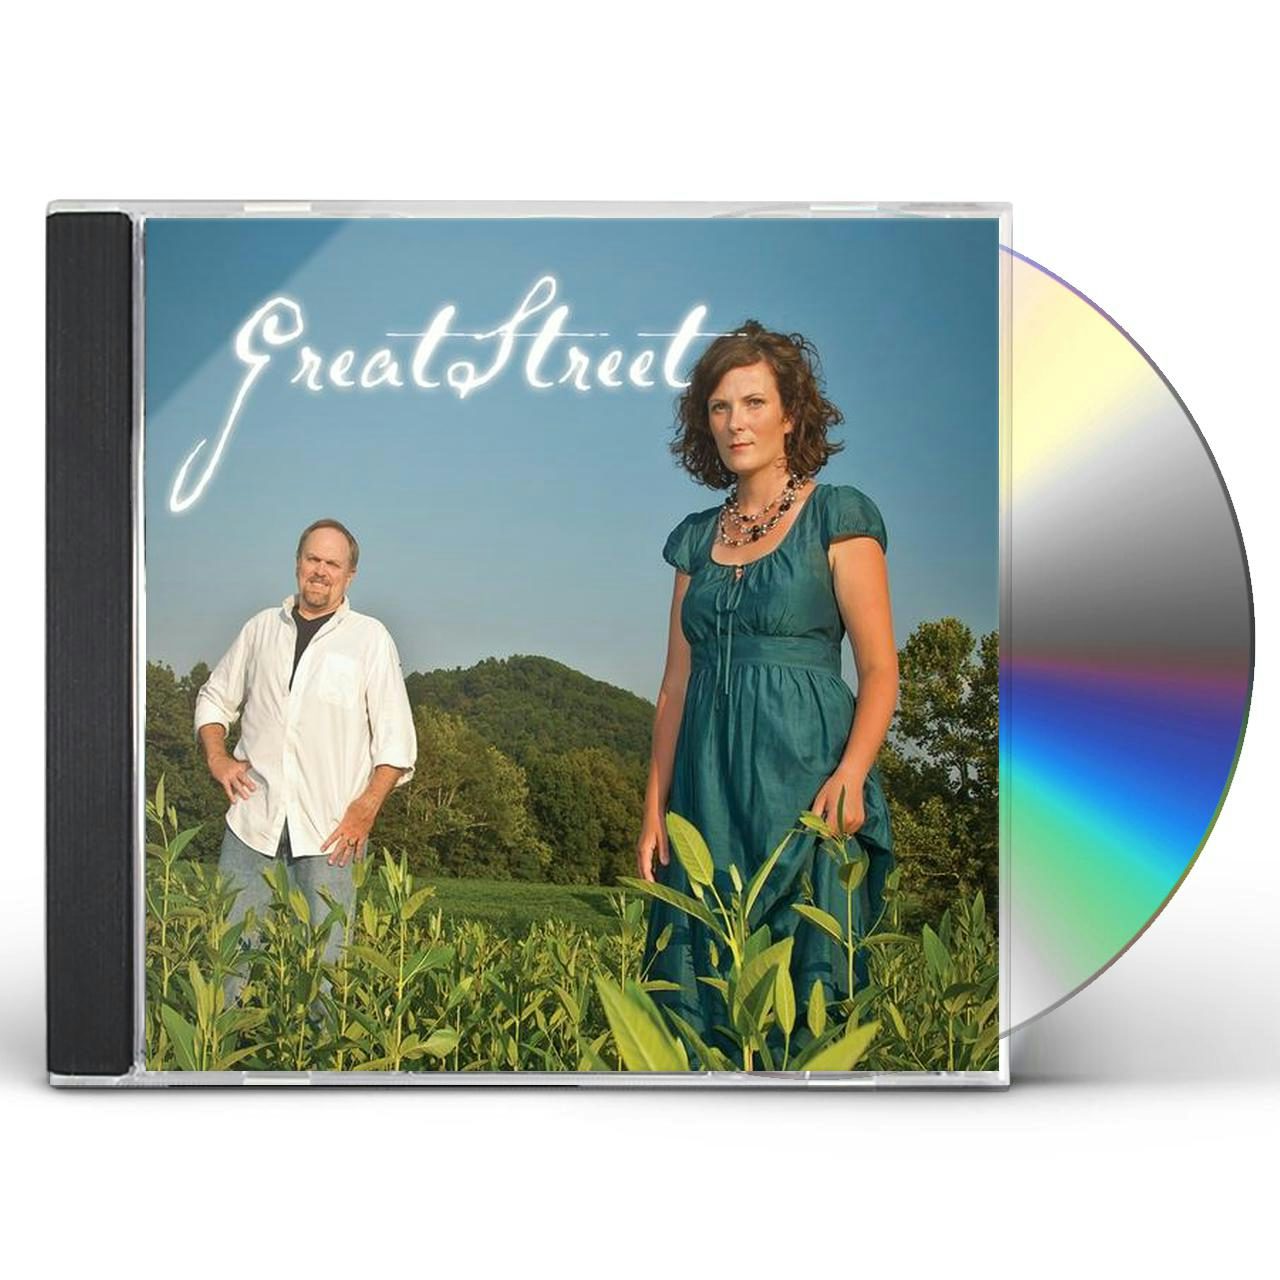 Greatstreet CD